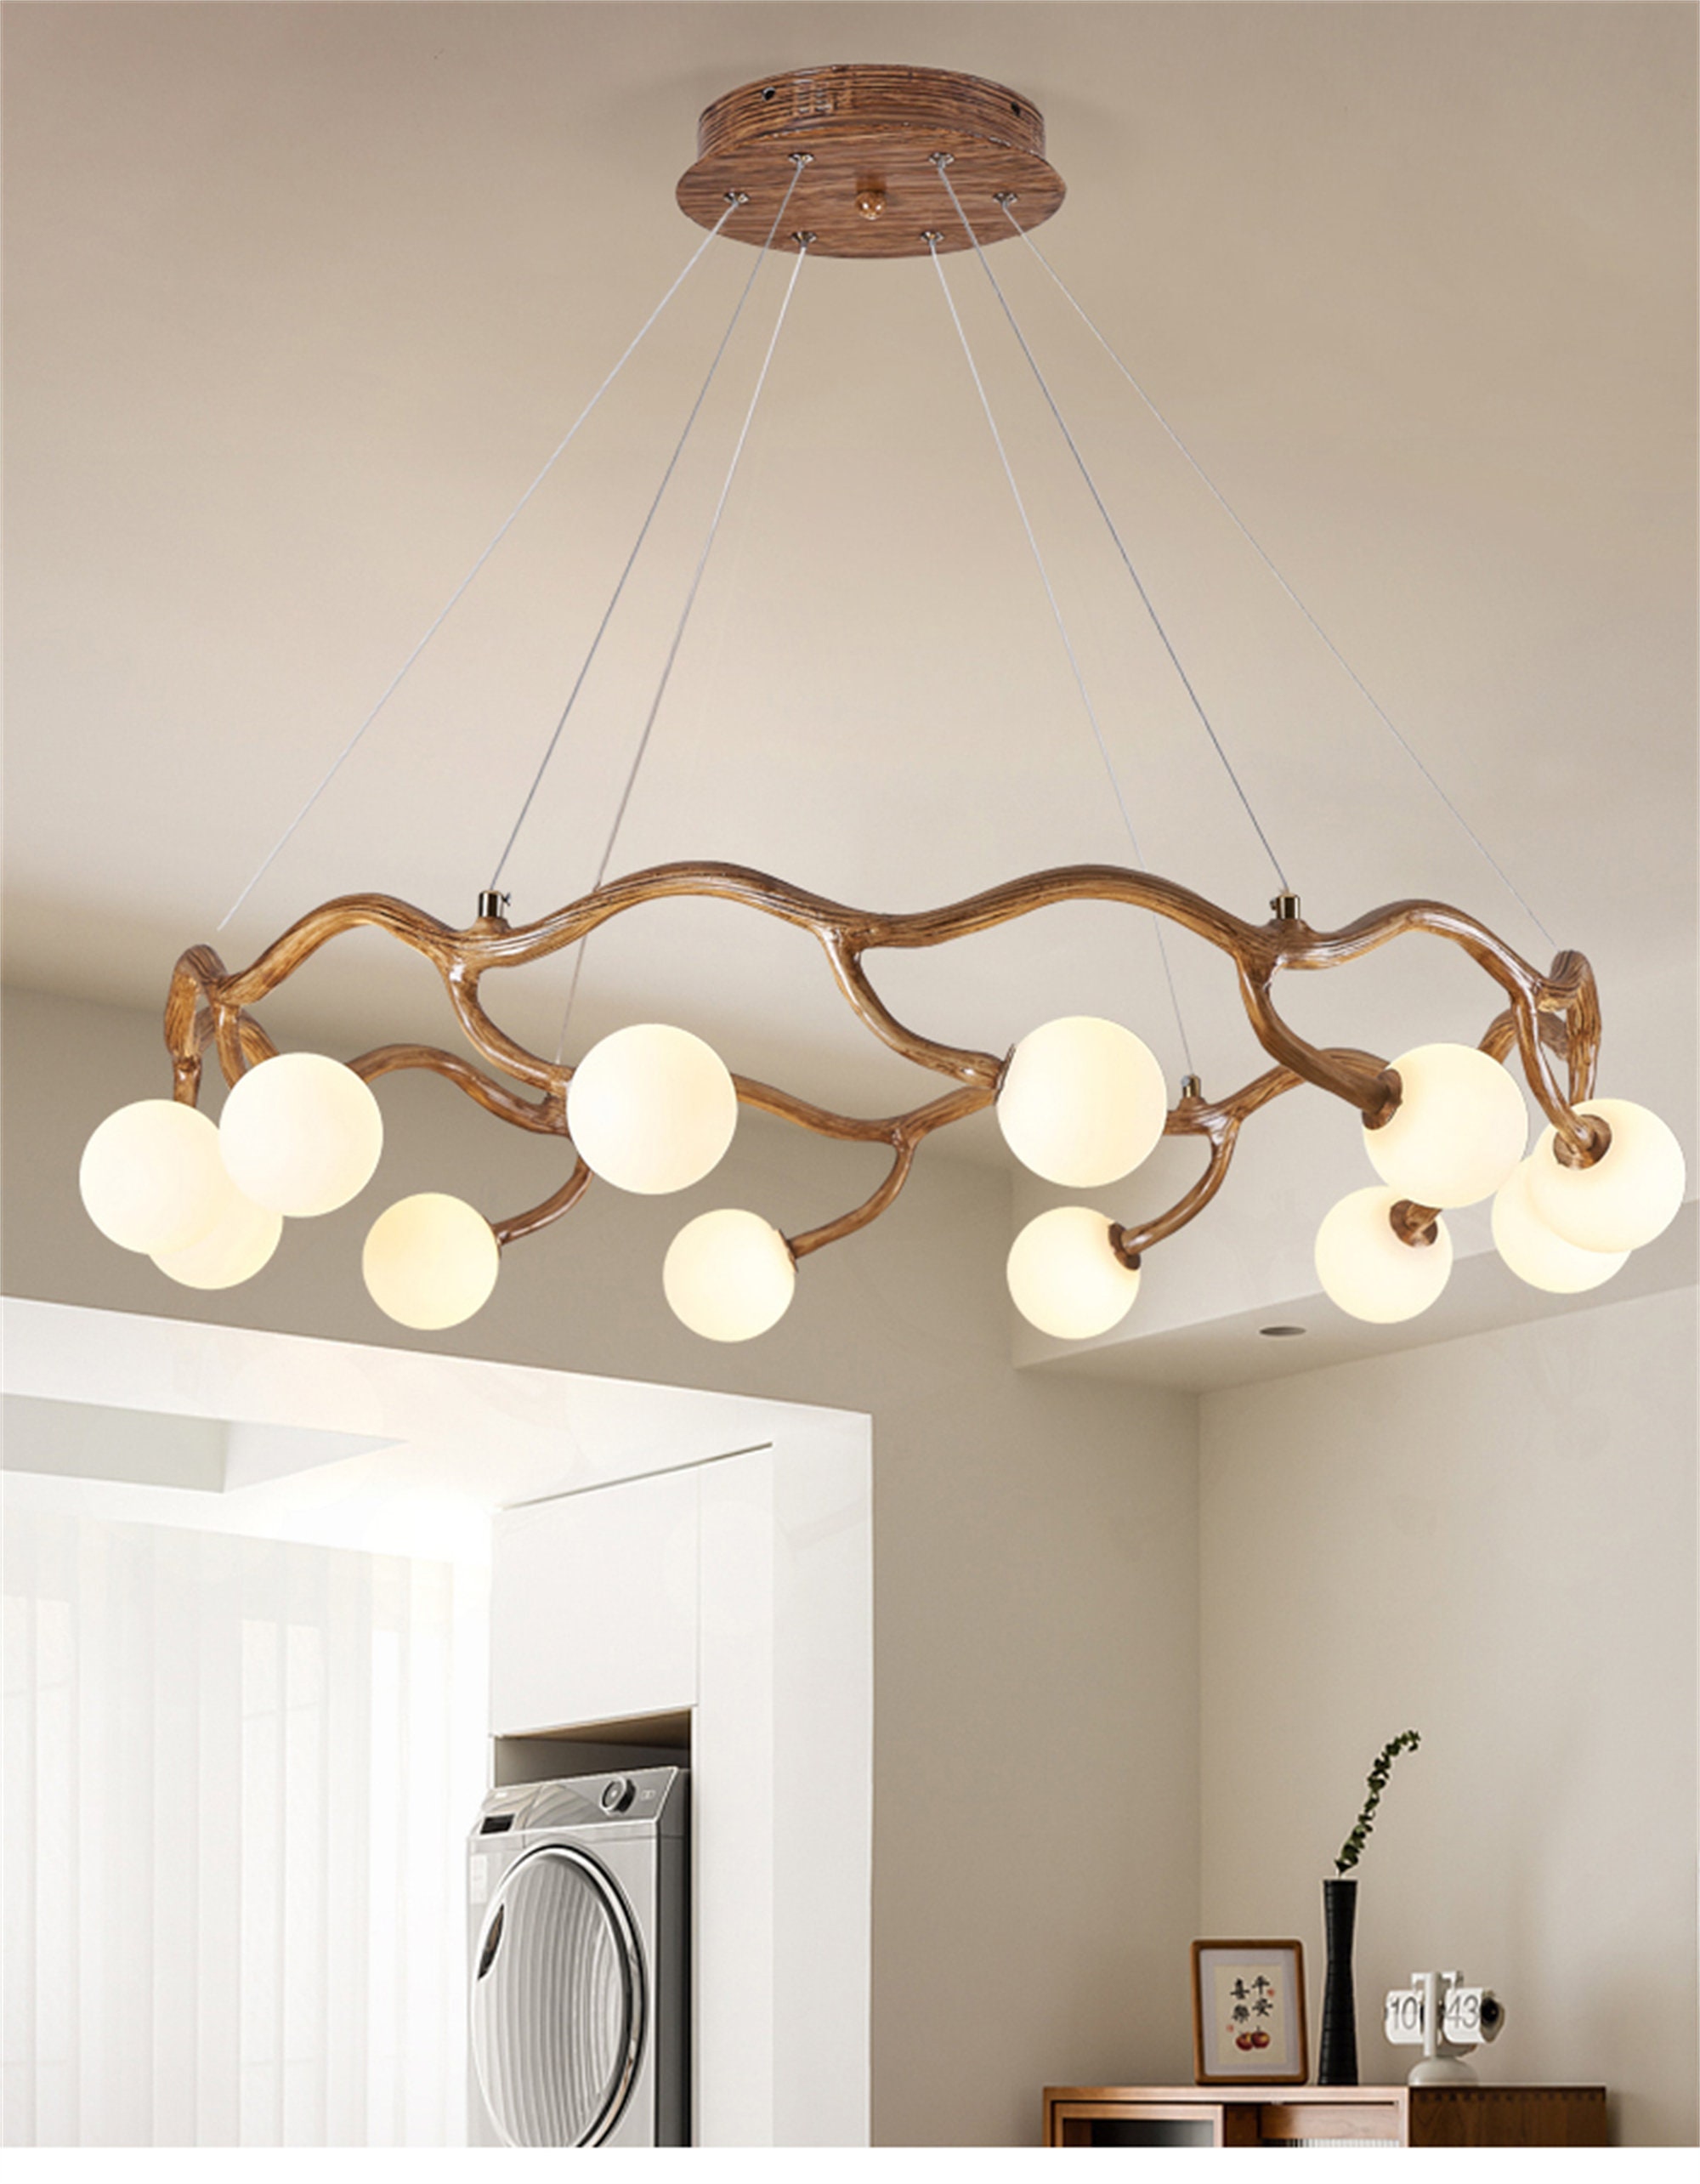 Round branch-shaped chandelier - Lighting